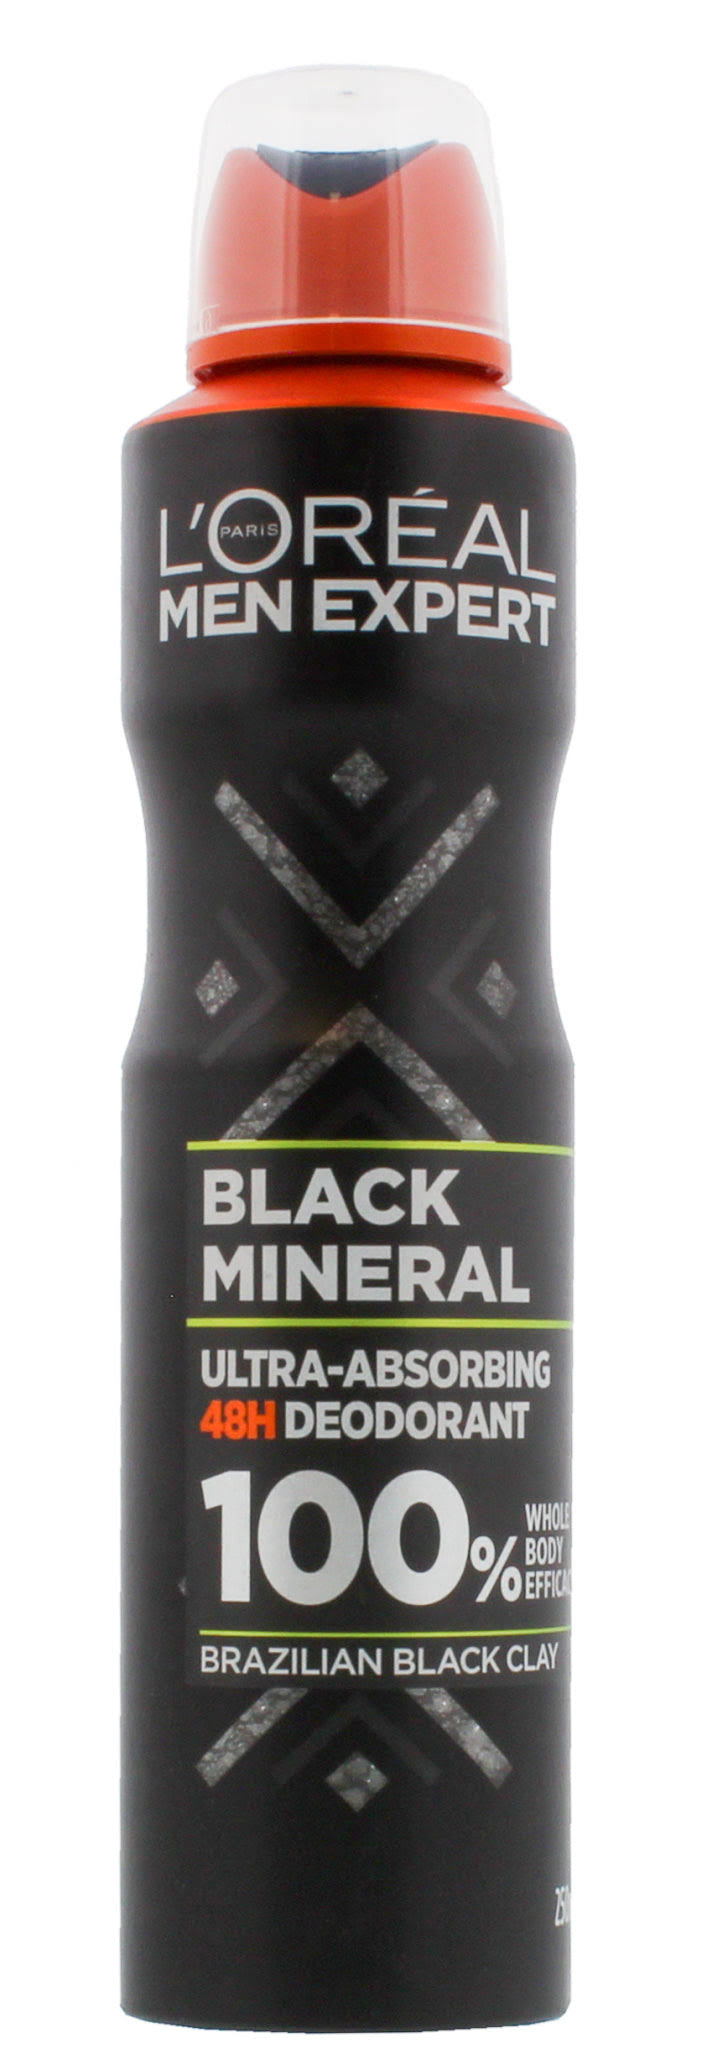 L'oreal Paris Men Expert Black Mineral Deodorant - 250ml